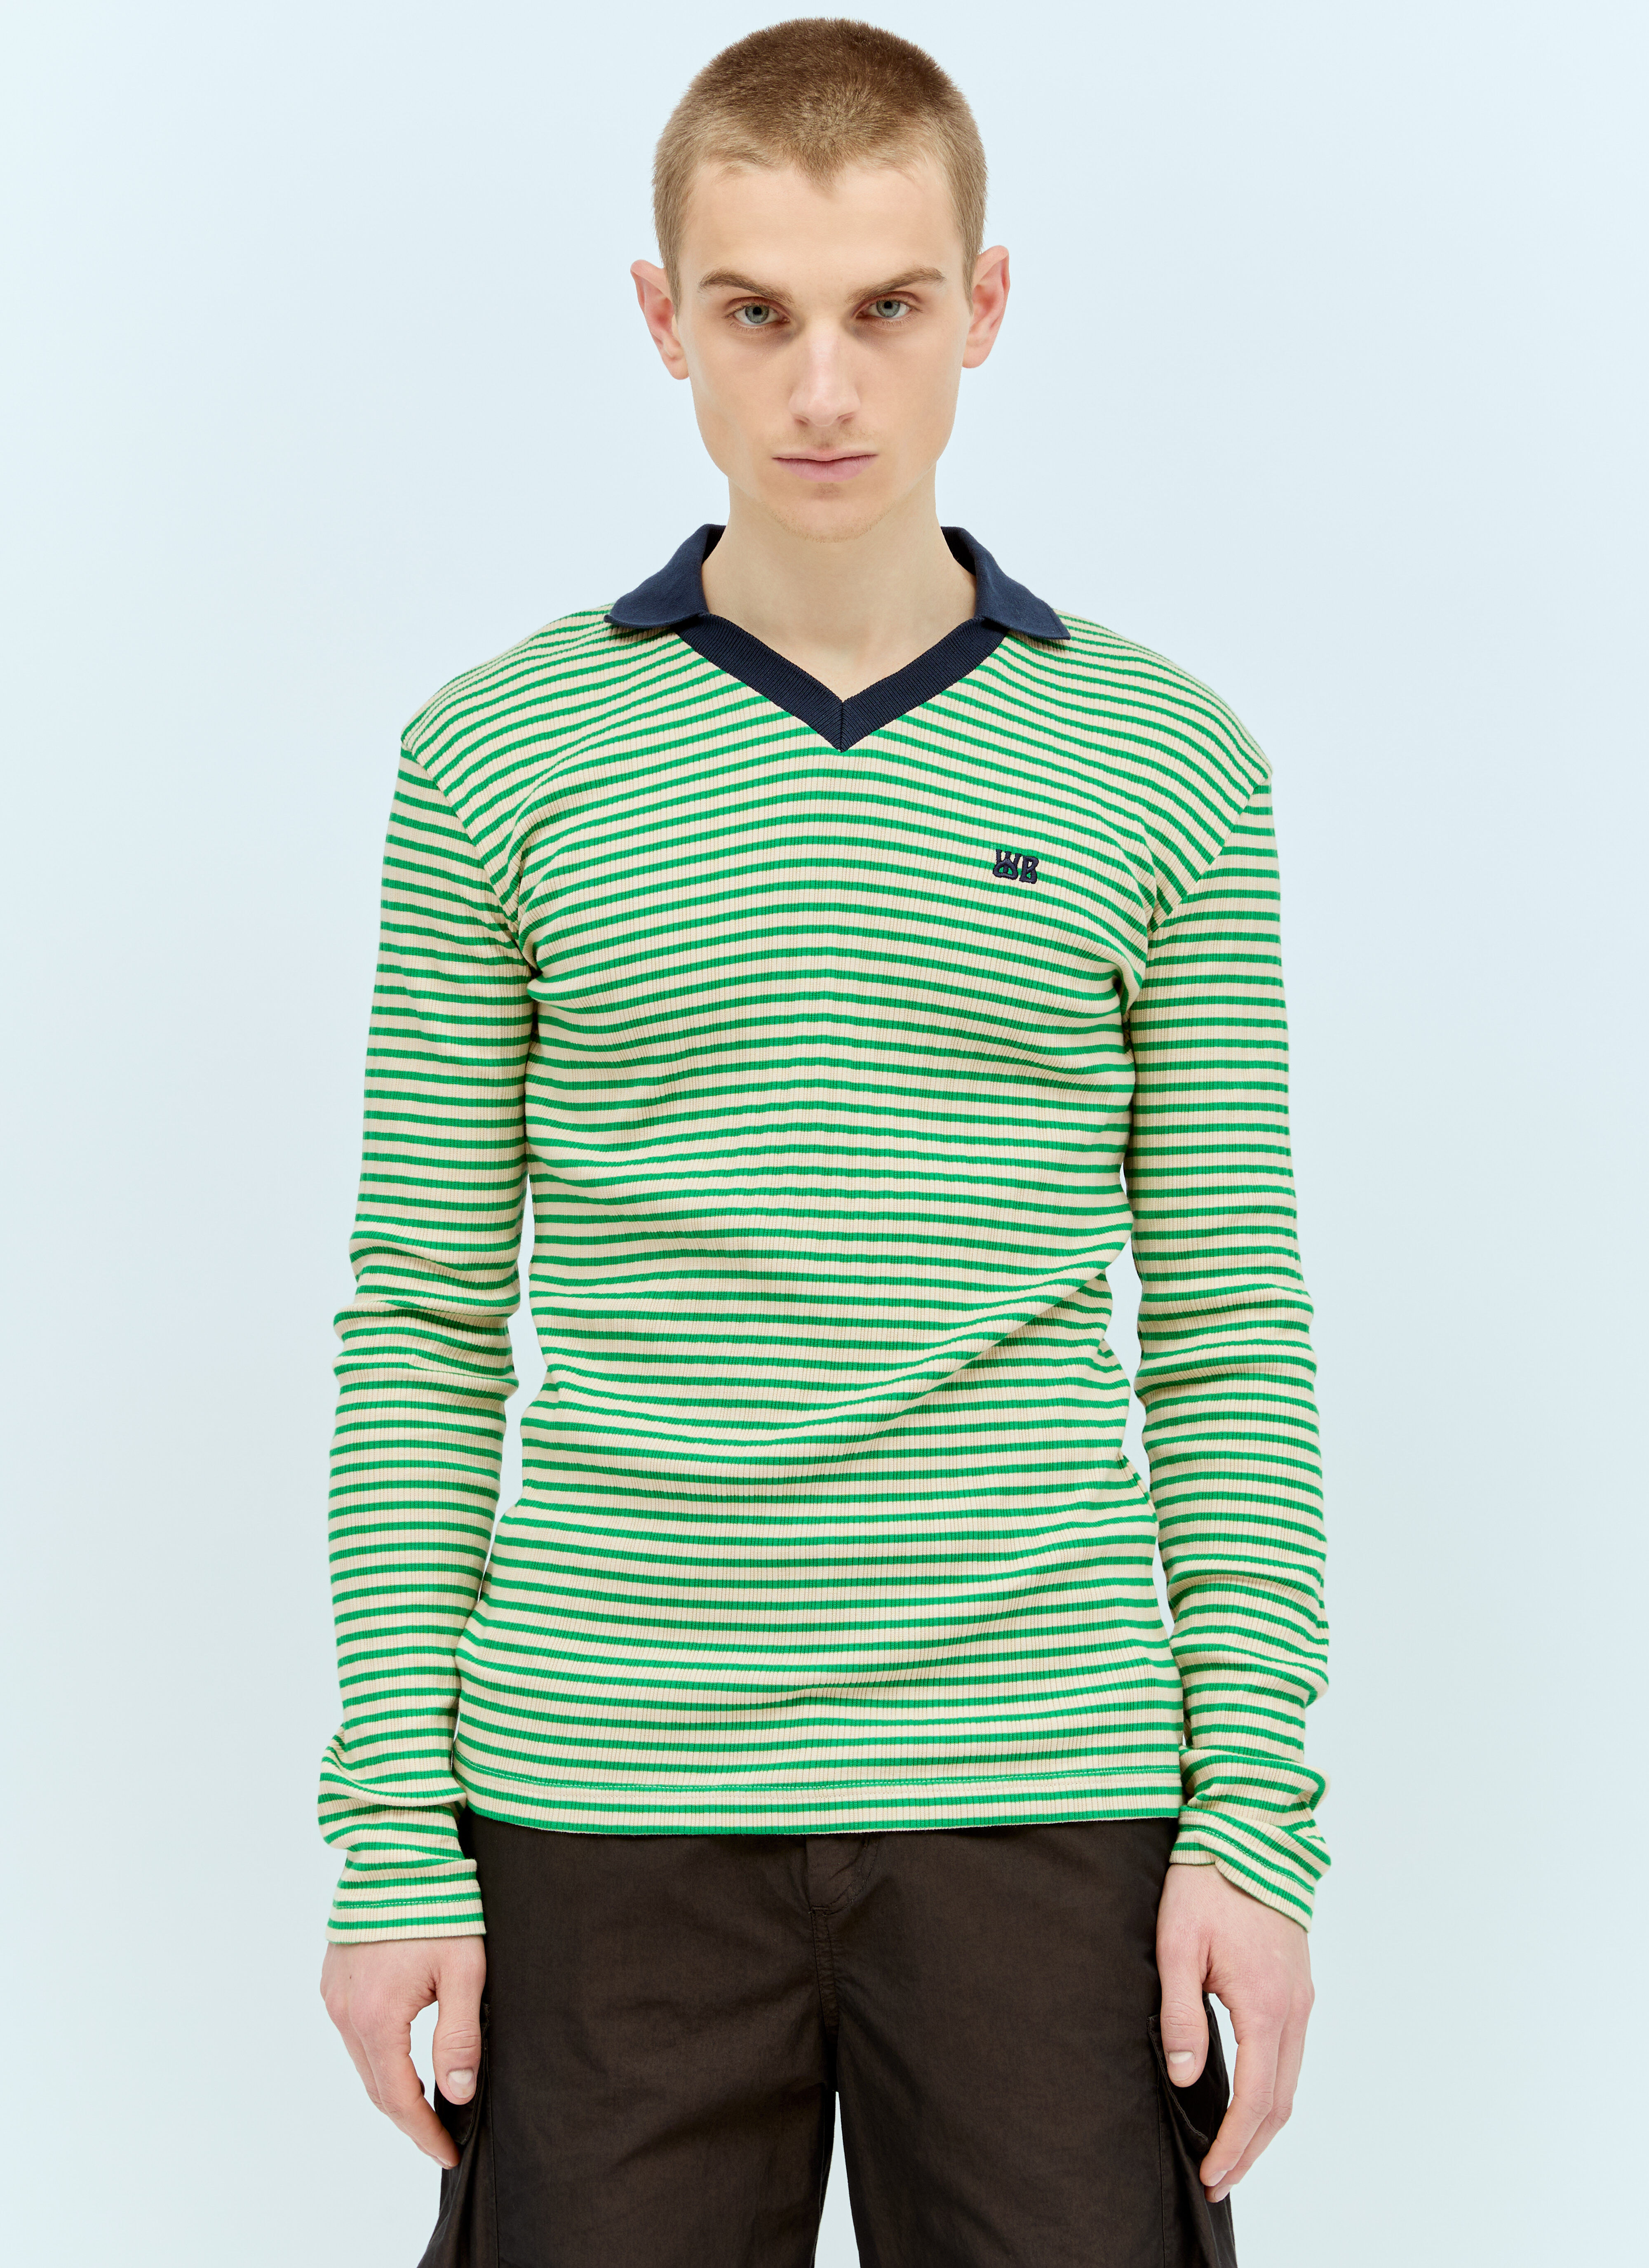 Wales Bonner Sonic Polo Shirt Green wbn0156005